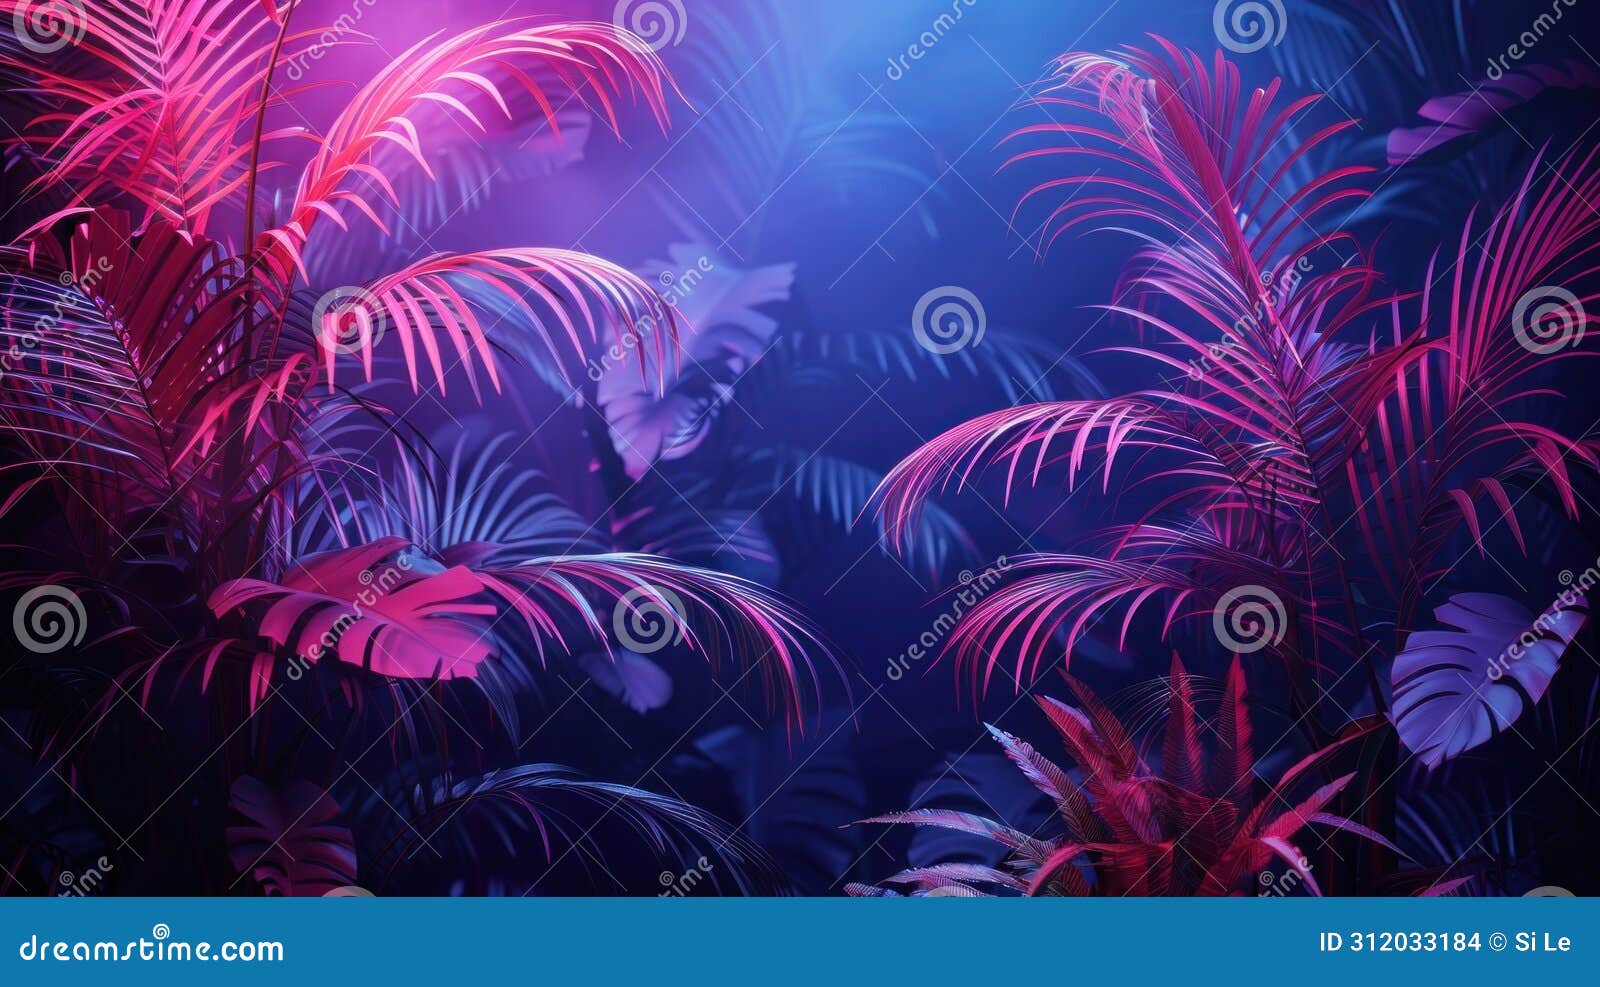 neon-lit tropical jungle with retro palms & plants in dark trend exotica